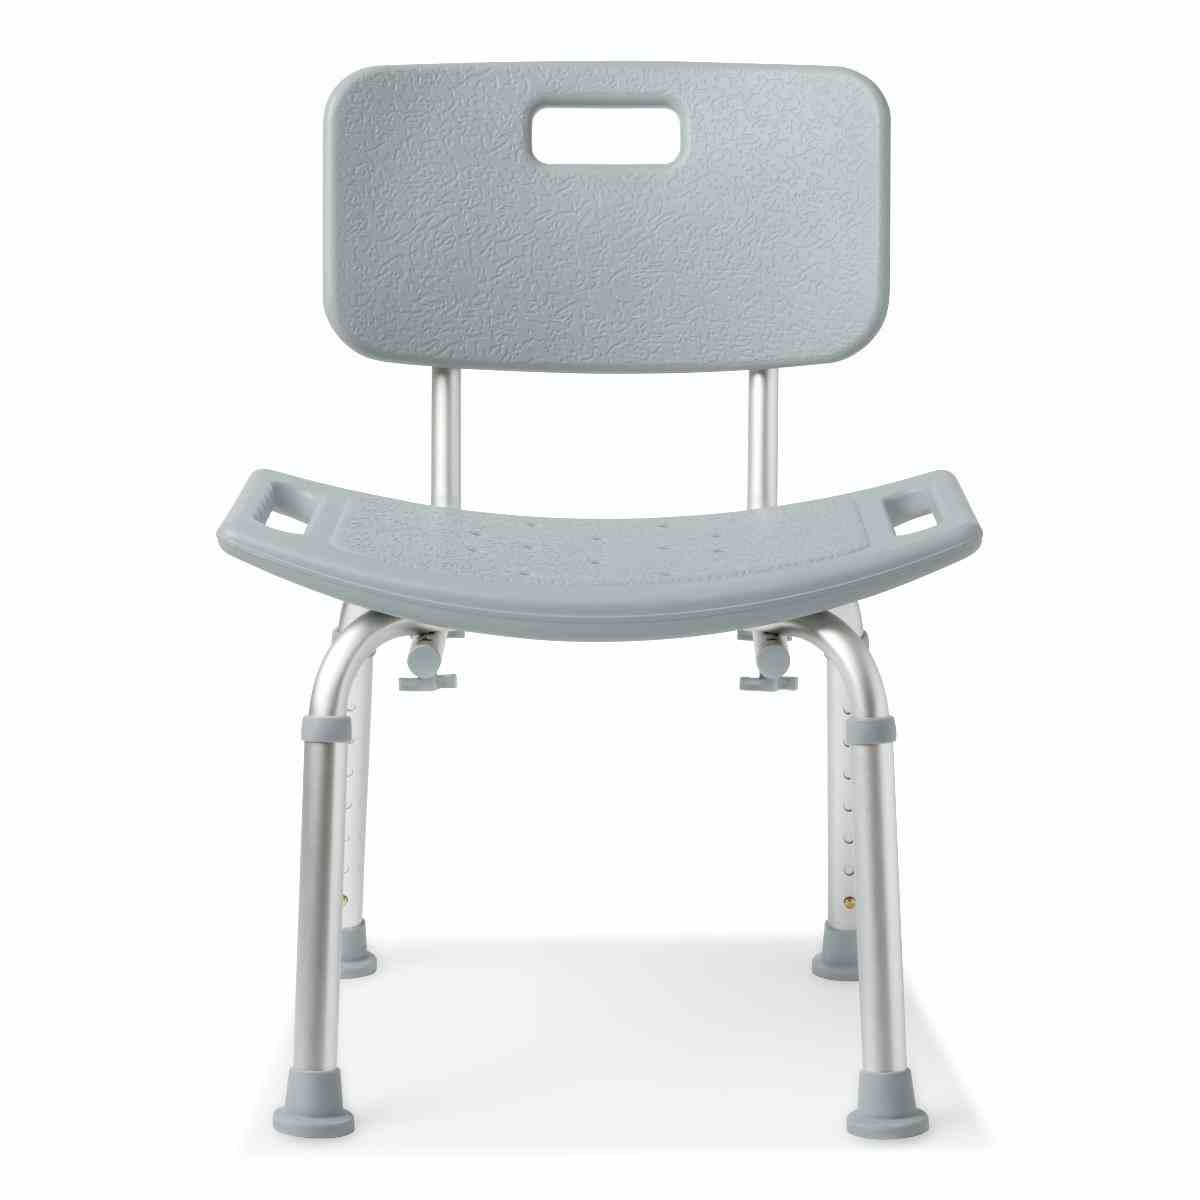 Medline Deluxe Aluminum Shower Chair with Back, G2-101KRX1, 1 Each